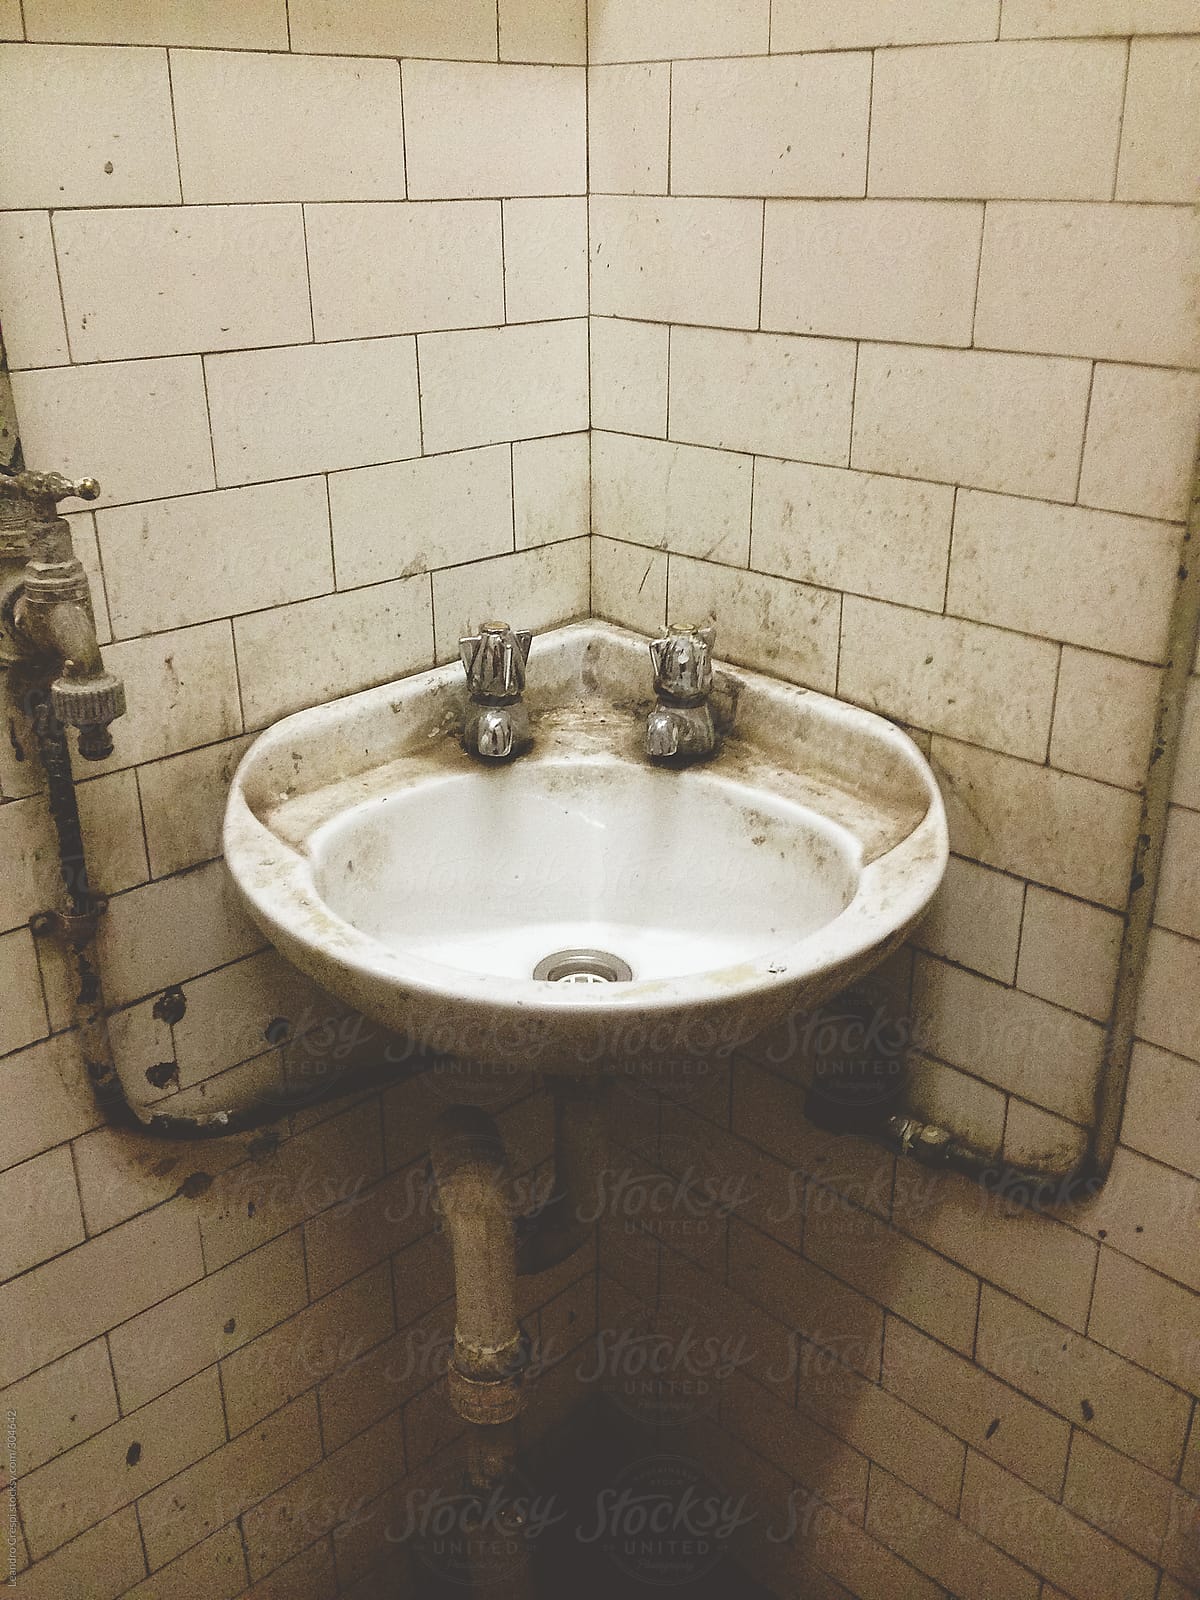 Old dirty restroom